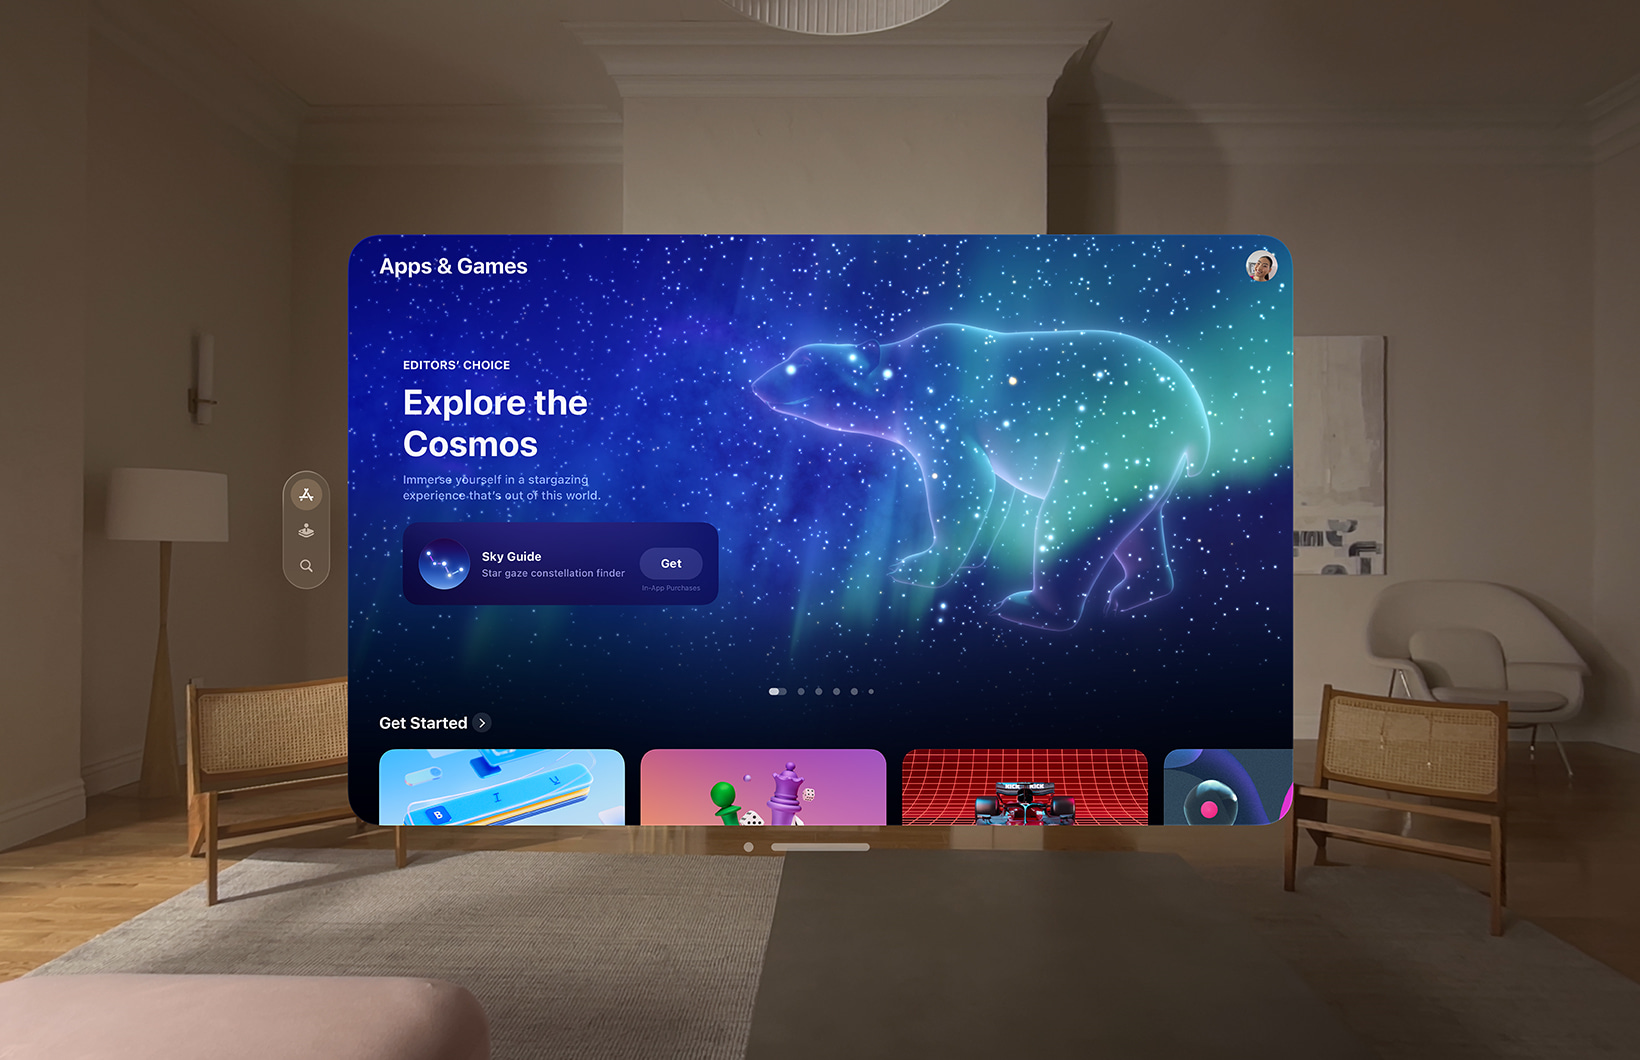 Apple Vision Pro 的 App Store 截屏出现在客厅中。截屏包含大熊座的大图像，标题为“探索宇宙”。